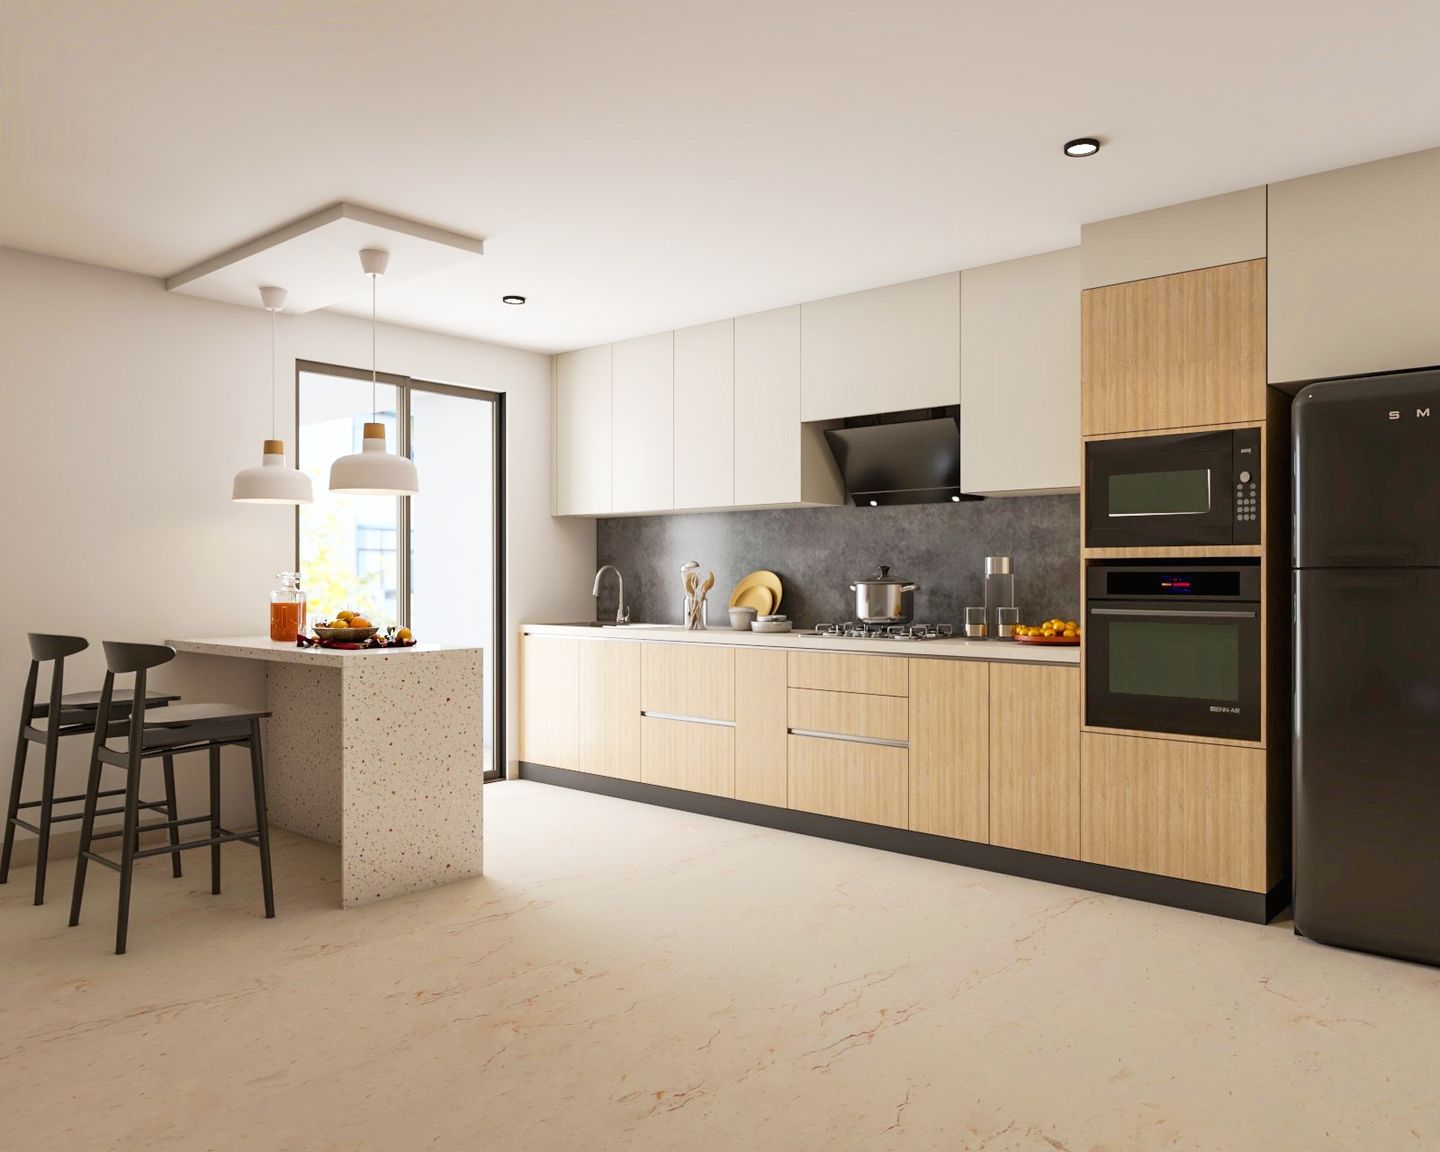 Straight White And Wood Kitchen Design With Quartz Breakfast Counter - Livspace